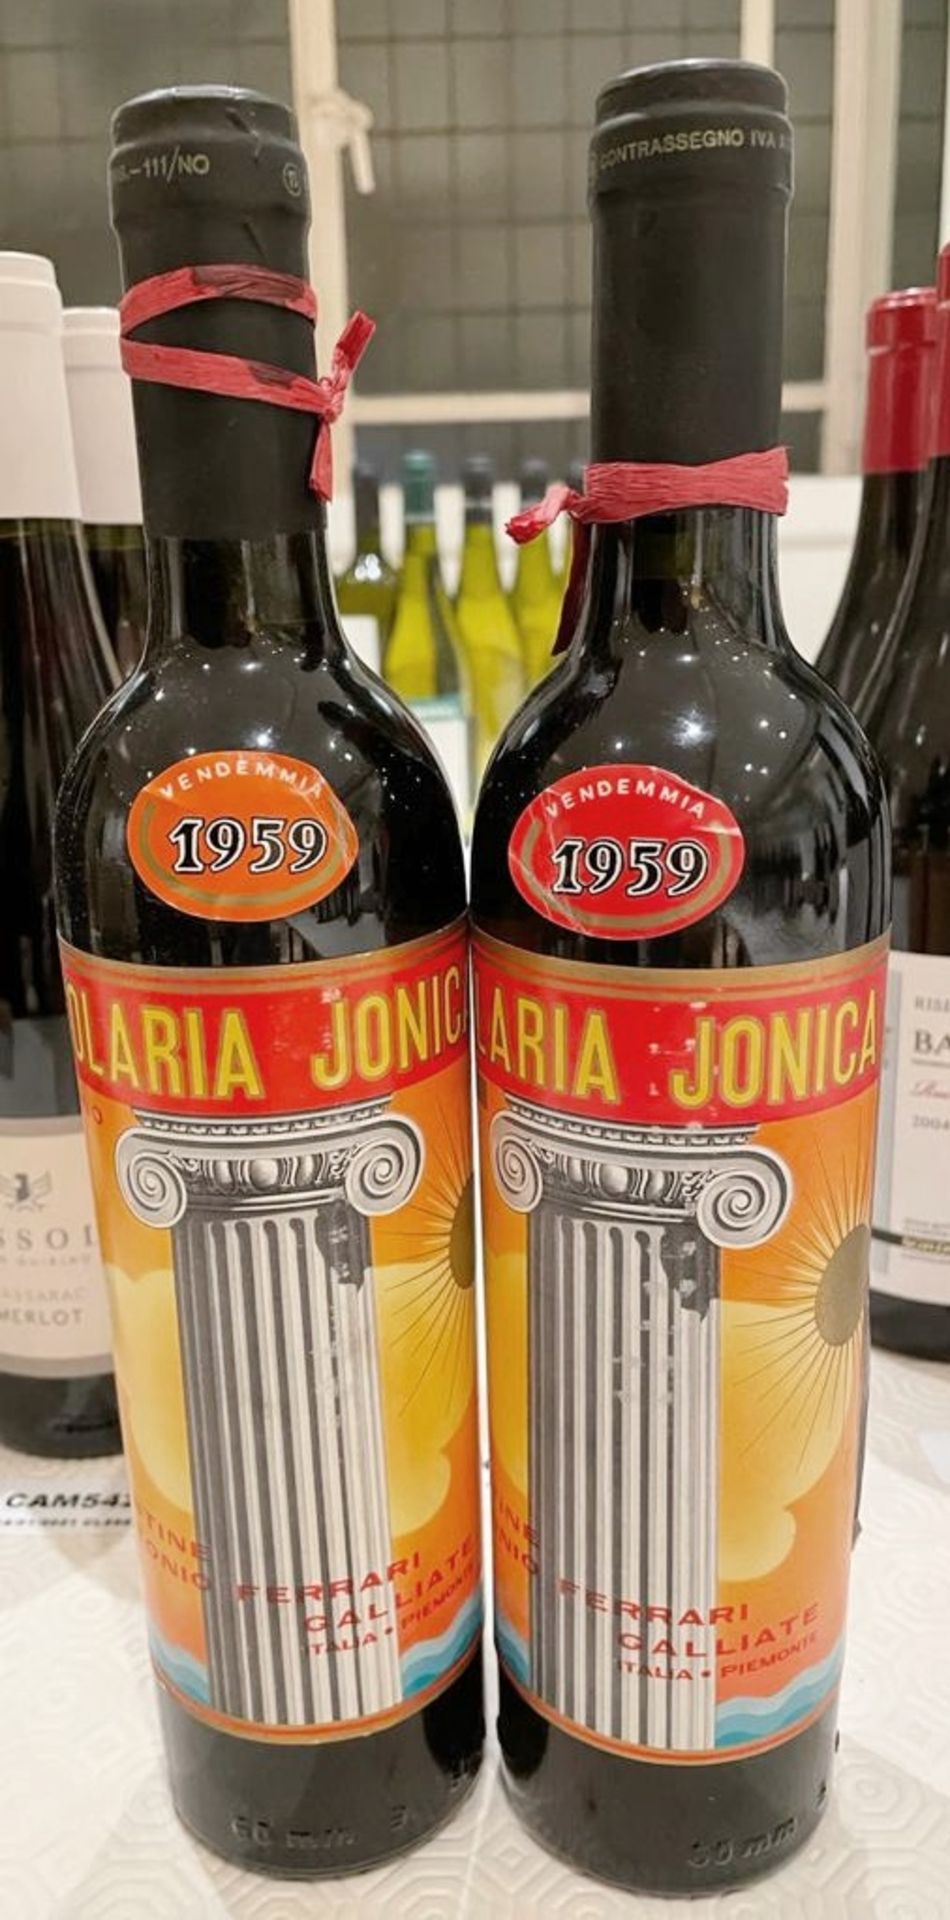 2 x Bottles Of SOLARIA JONICA CALLANTE VENDEMMIA 1959 PIEMONTE - 75cl New/Unopened Restaurant Stock